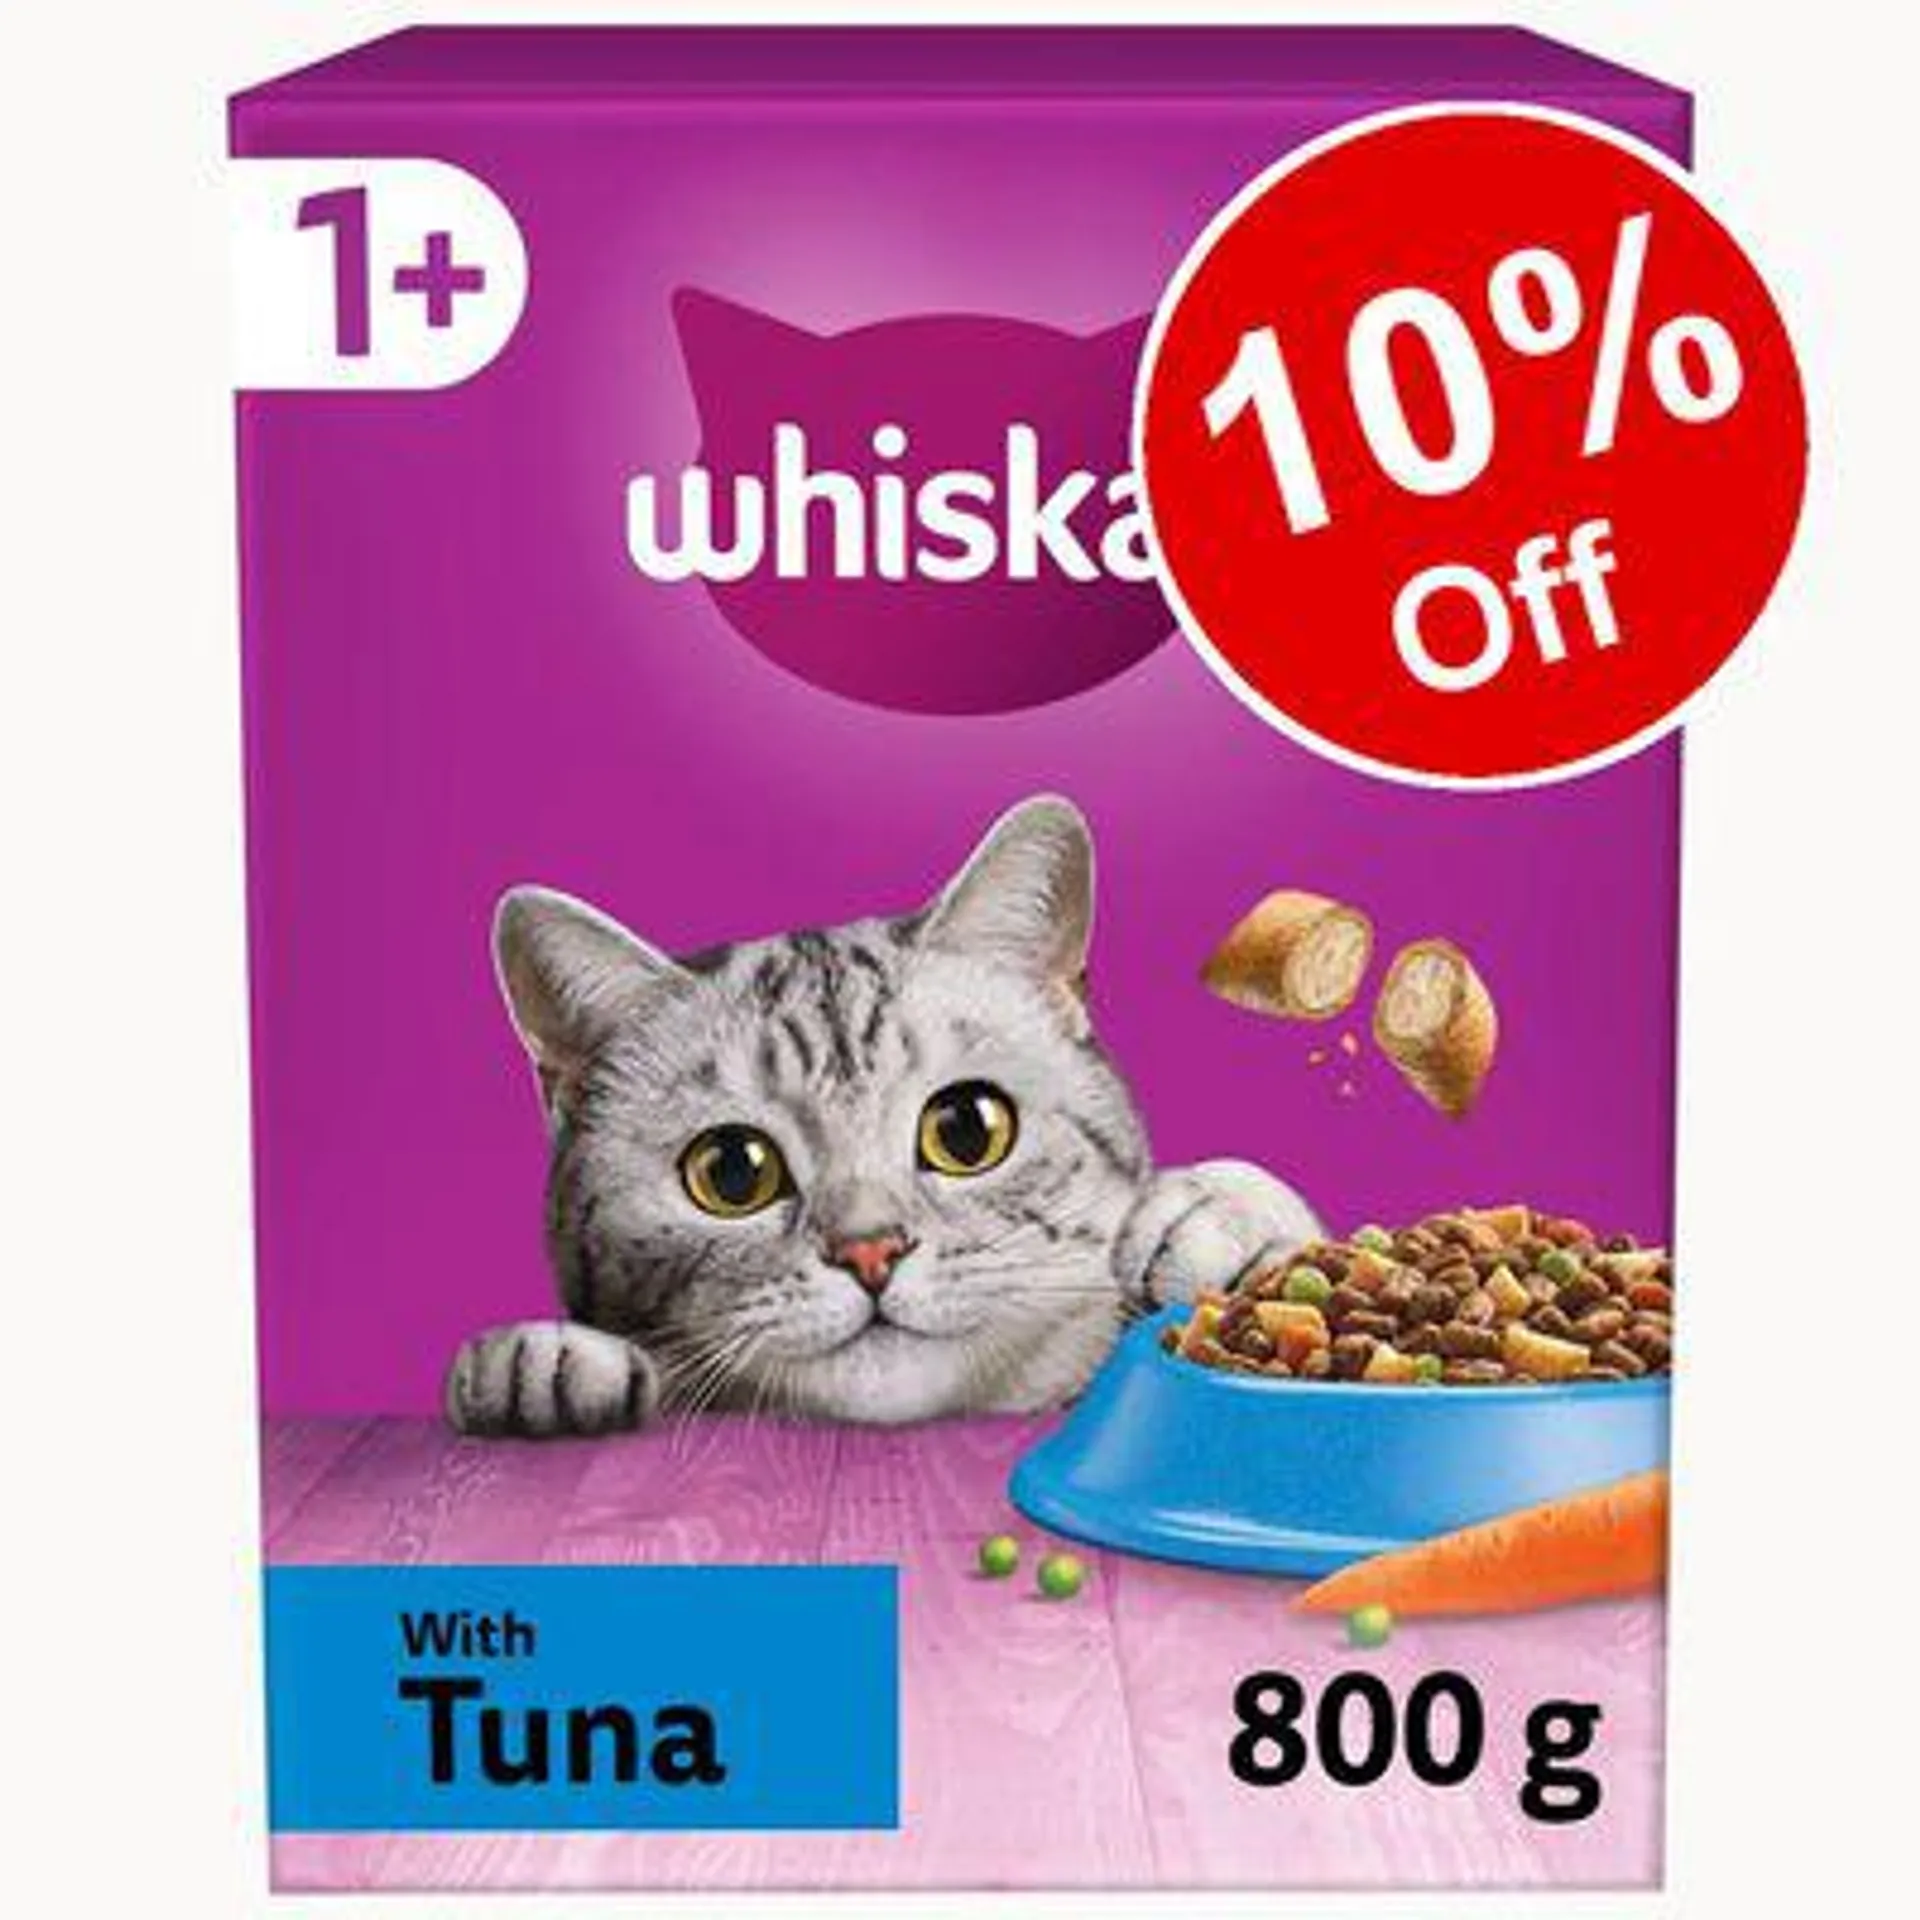 Whiskas Dry Cat Food - 10% Off! *